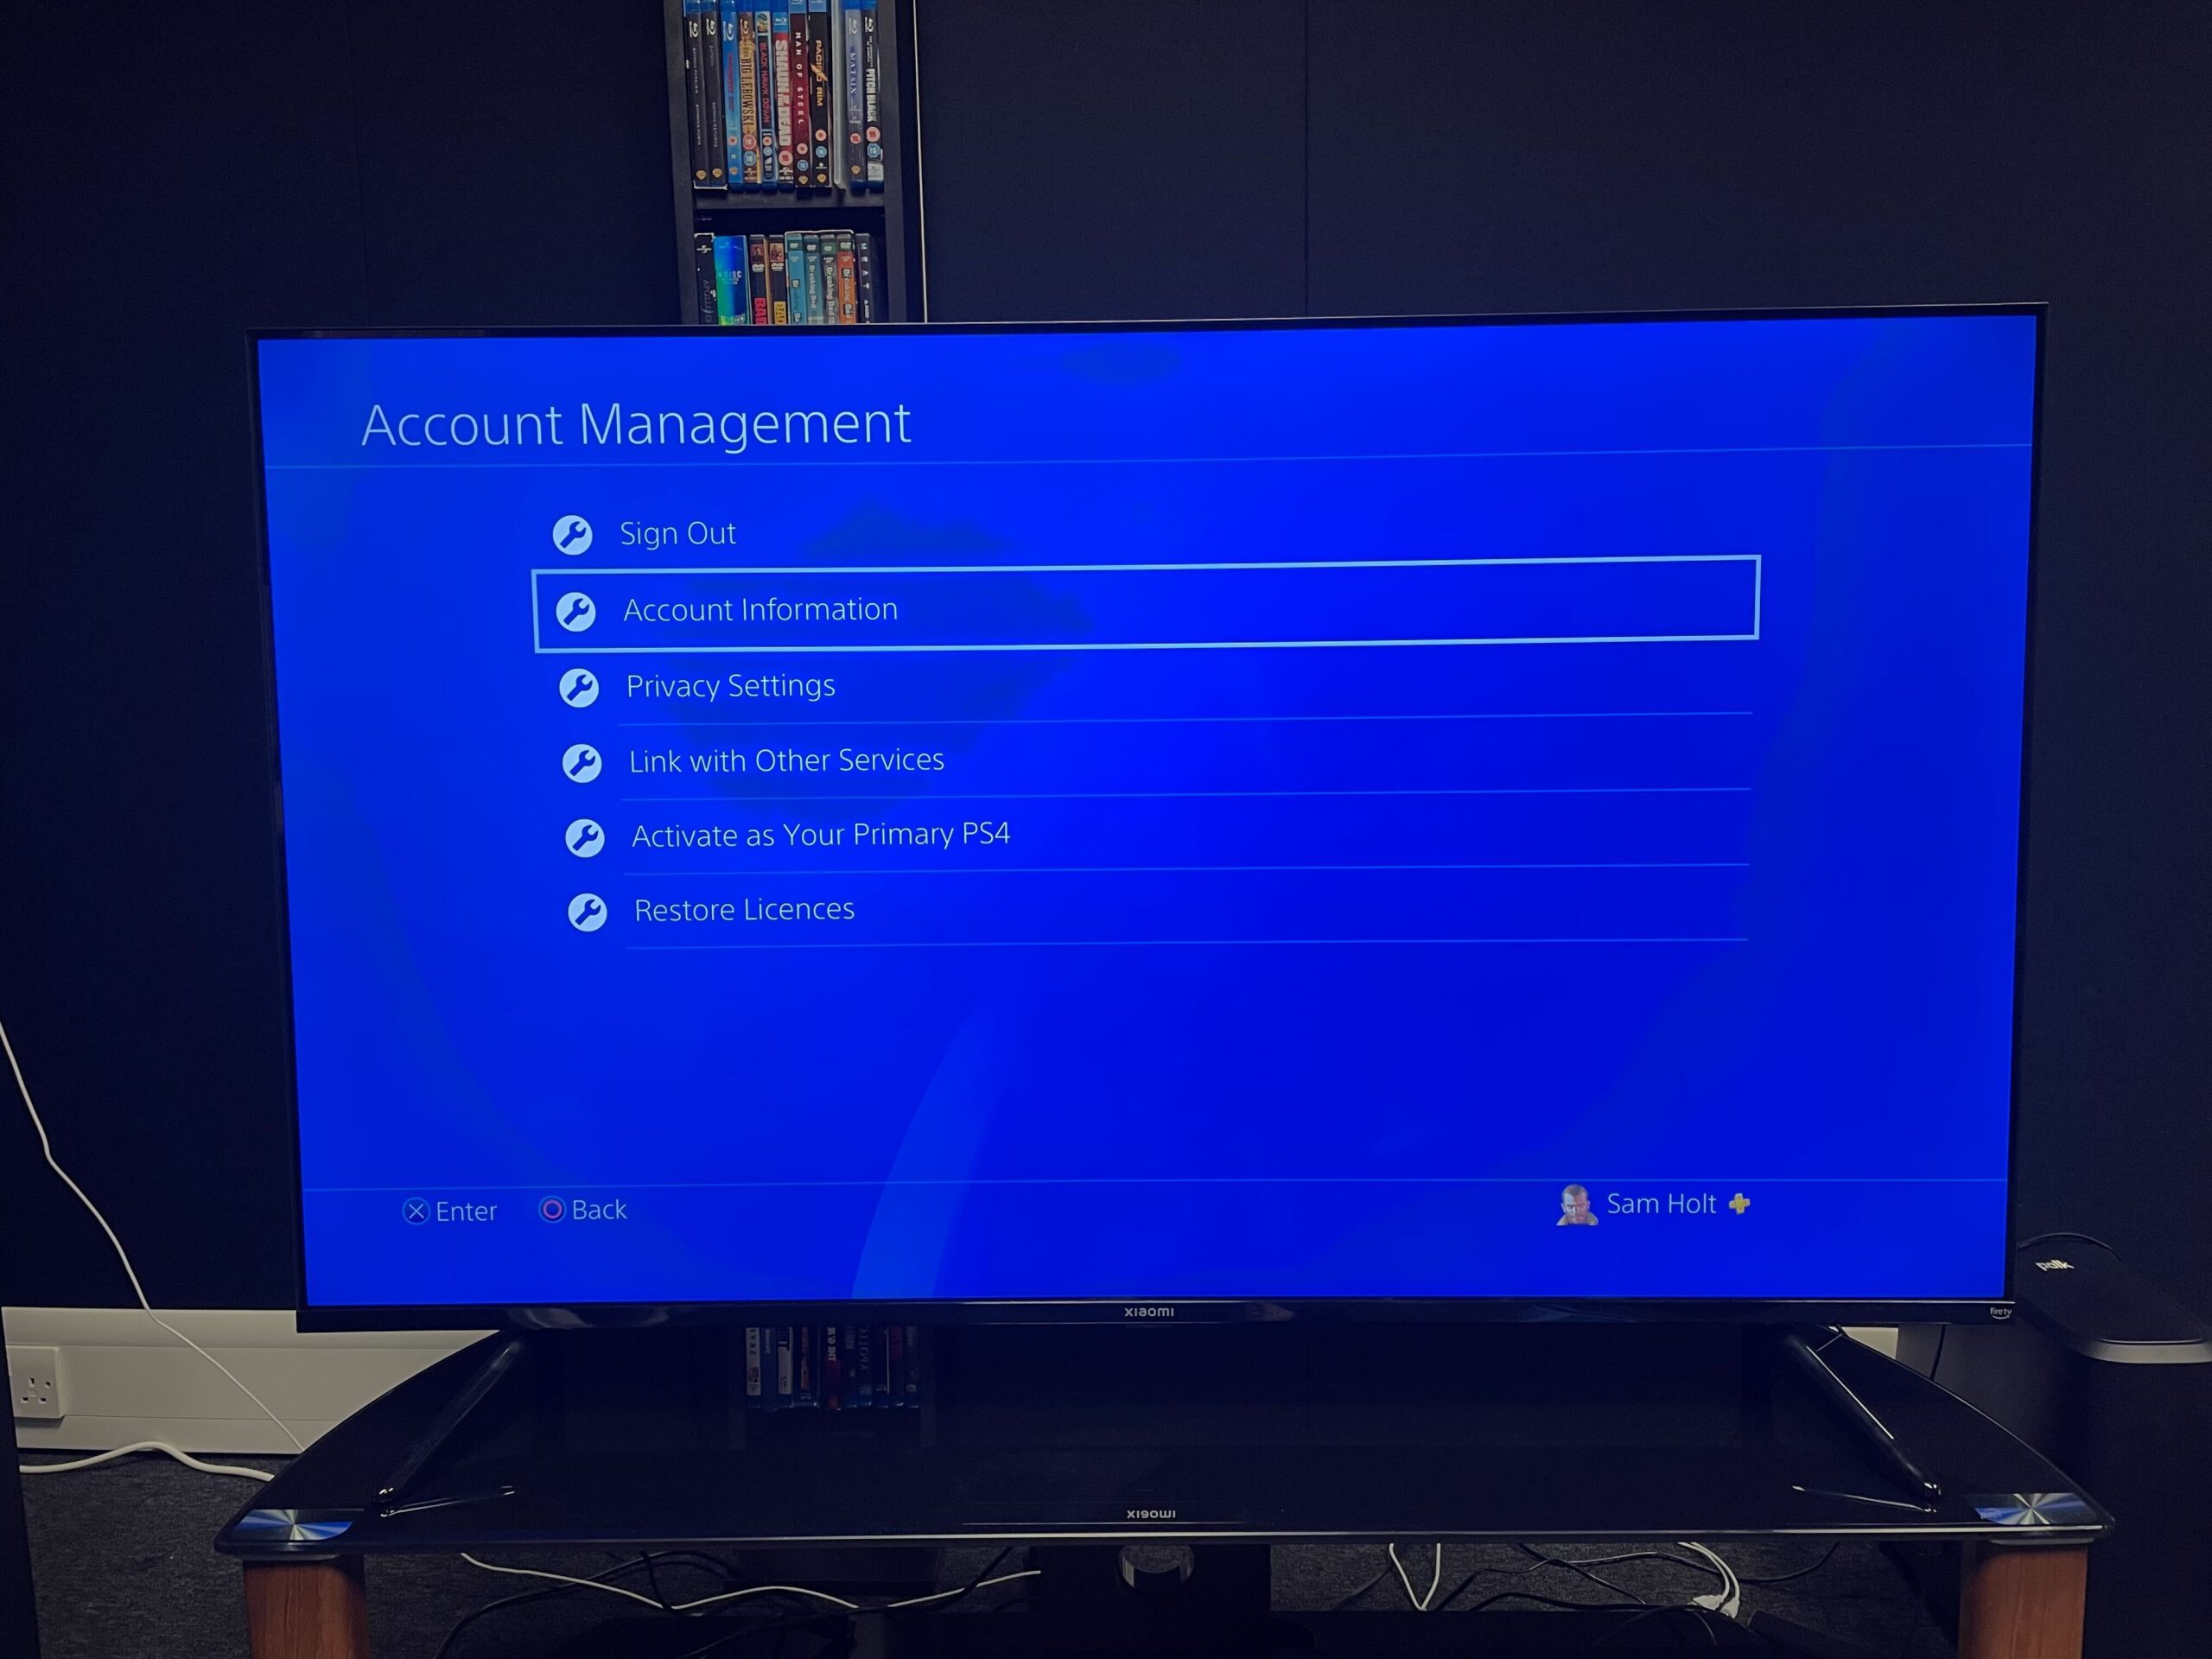 Account management settings